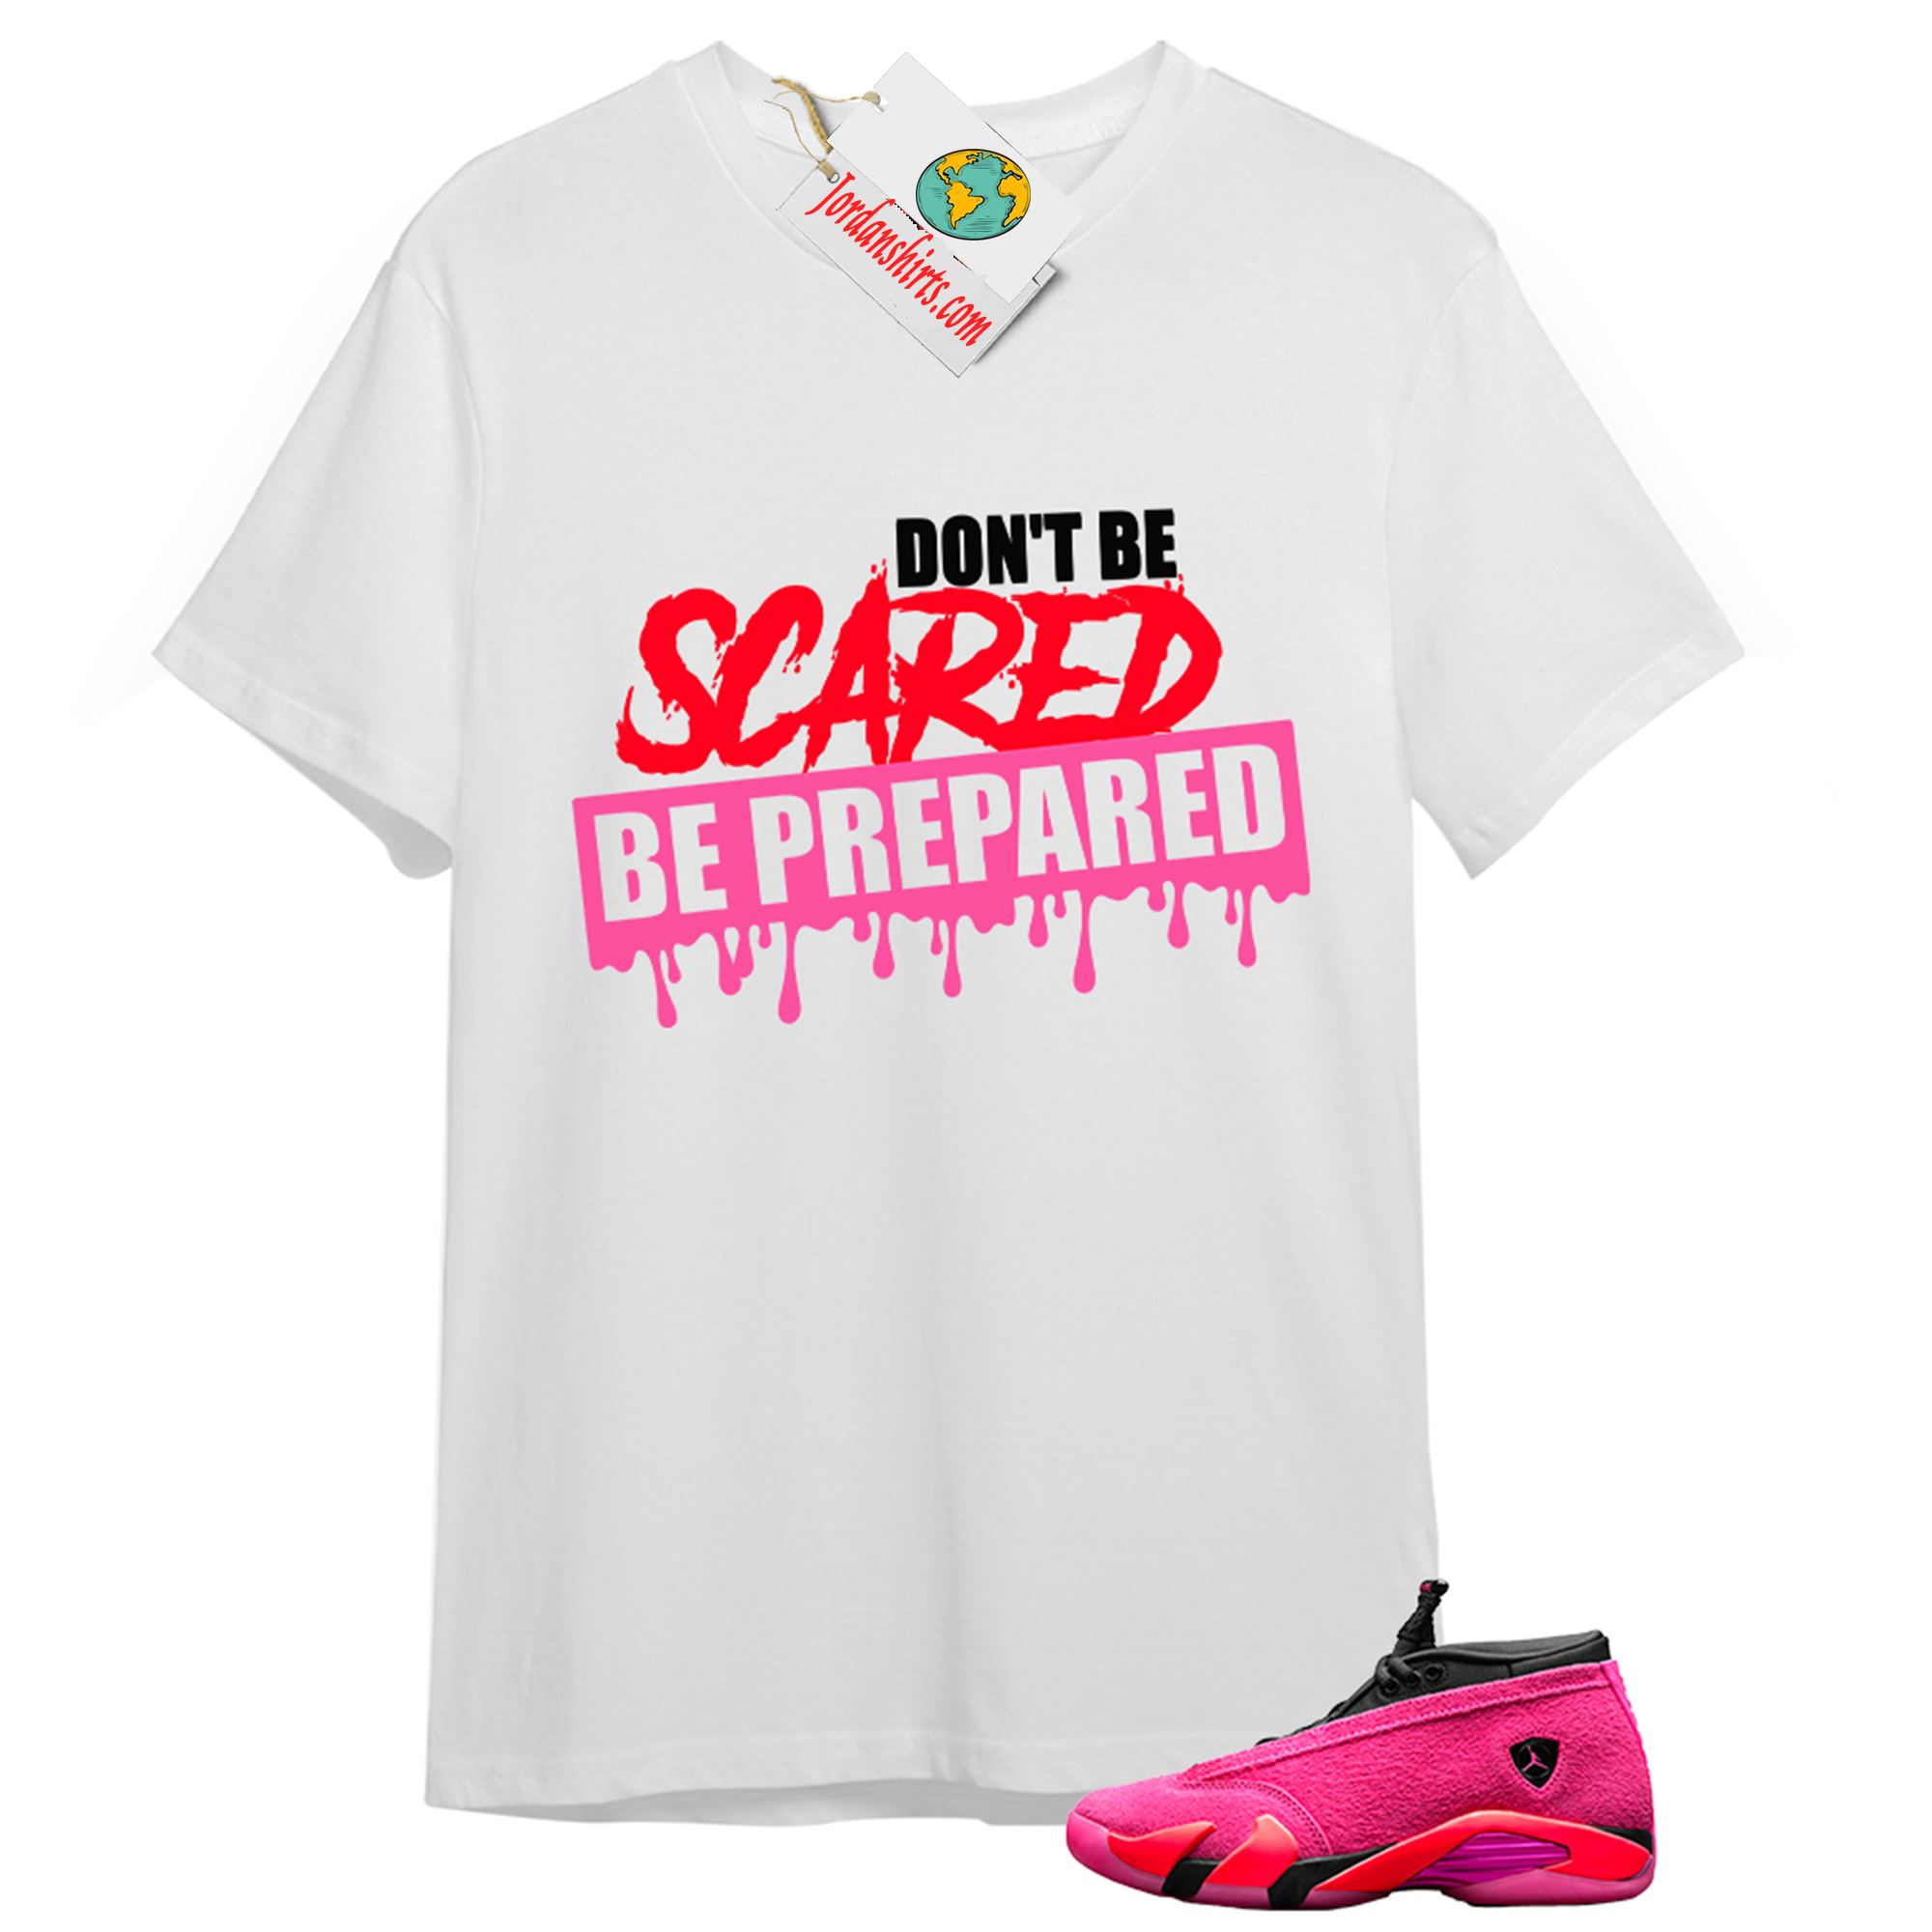 Jordan 14 Shirt, Dont Be Scared Be Prepared White T-shirt Air Jordan 14 Wmns Shocking Pink 14s Plus Size Up To 5xl